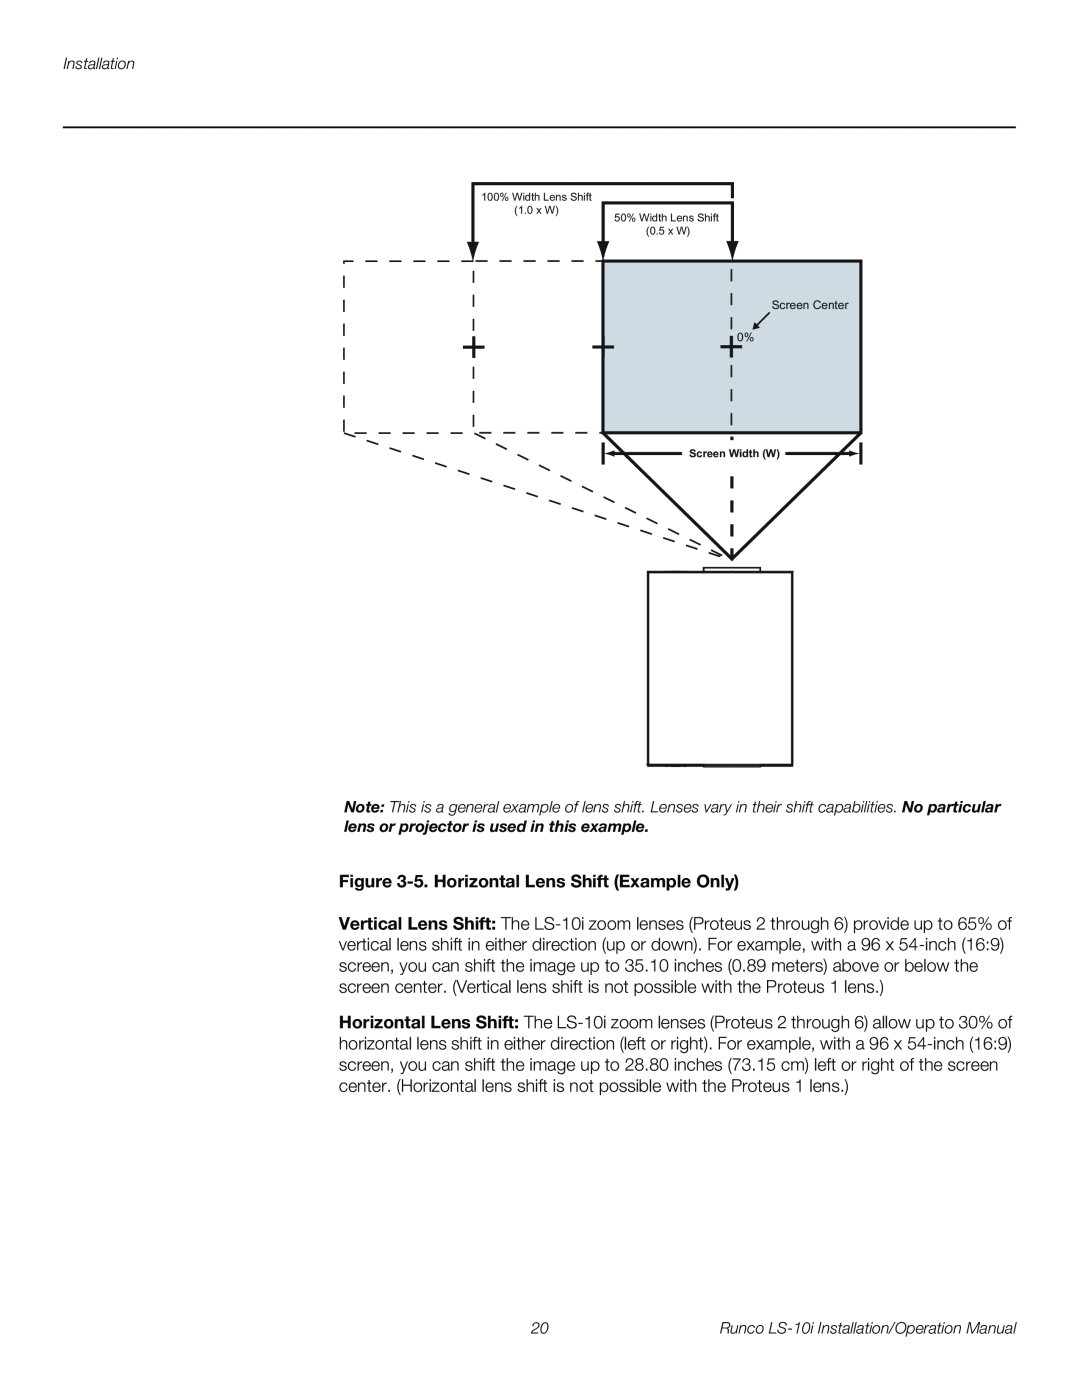 Runco LS-10I operation manual 5.Horizontal Lens Shift Example Only, Installation 